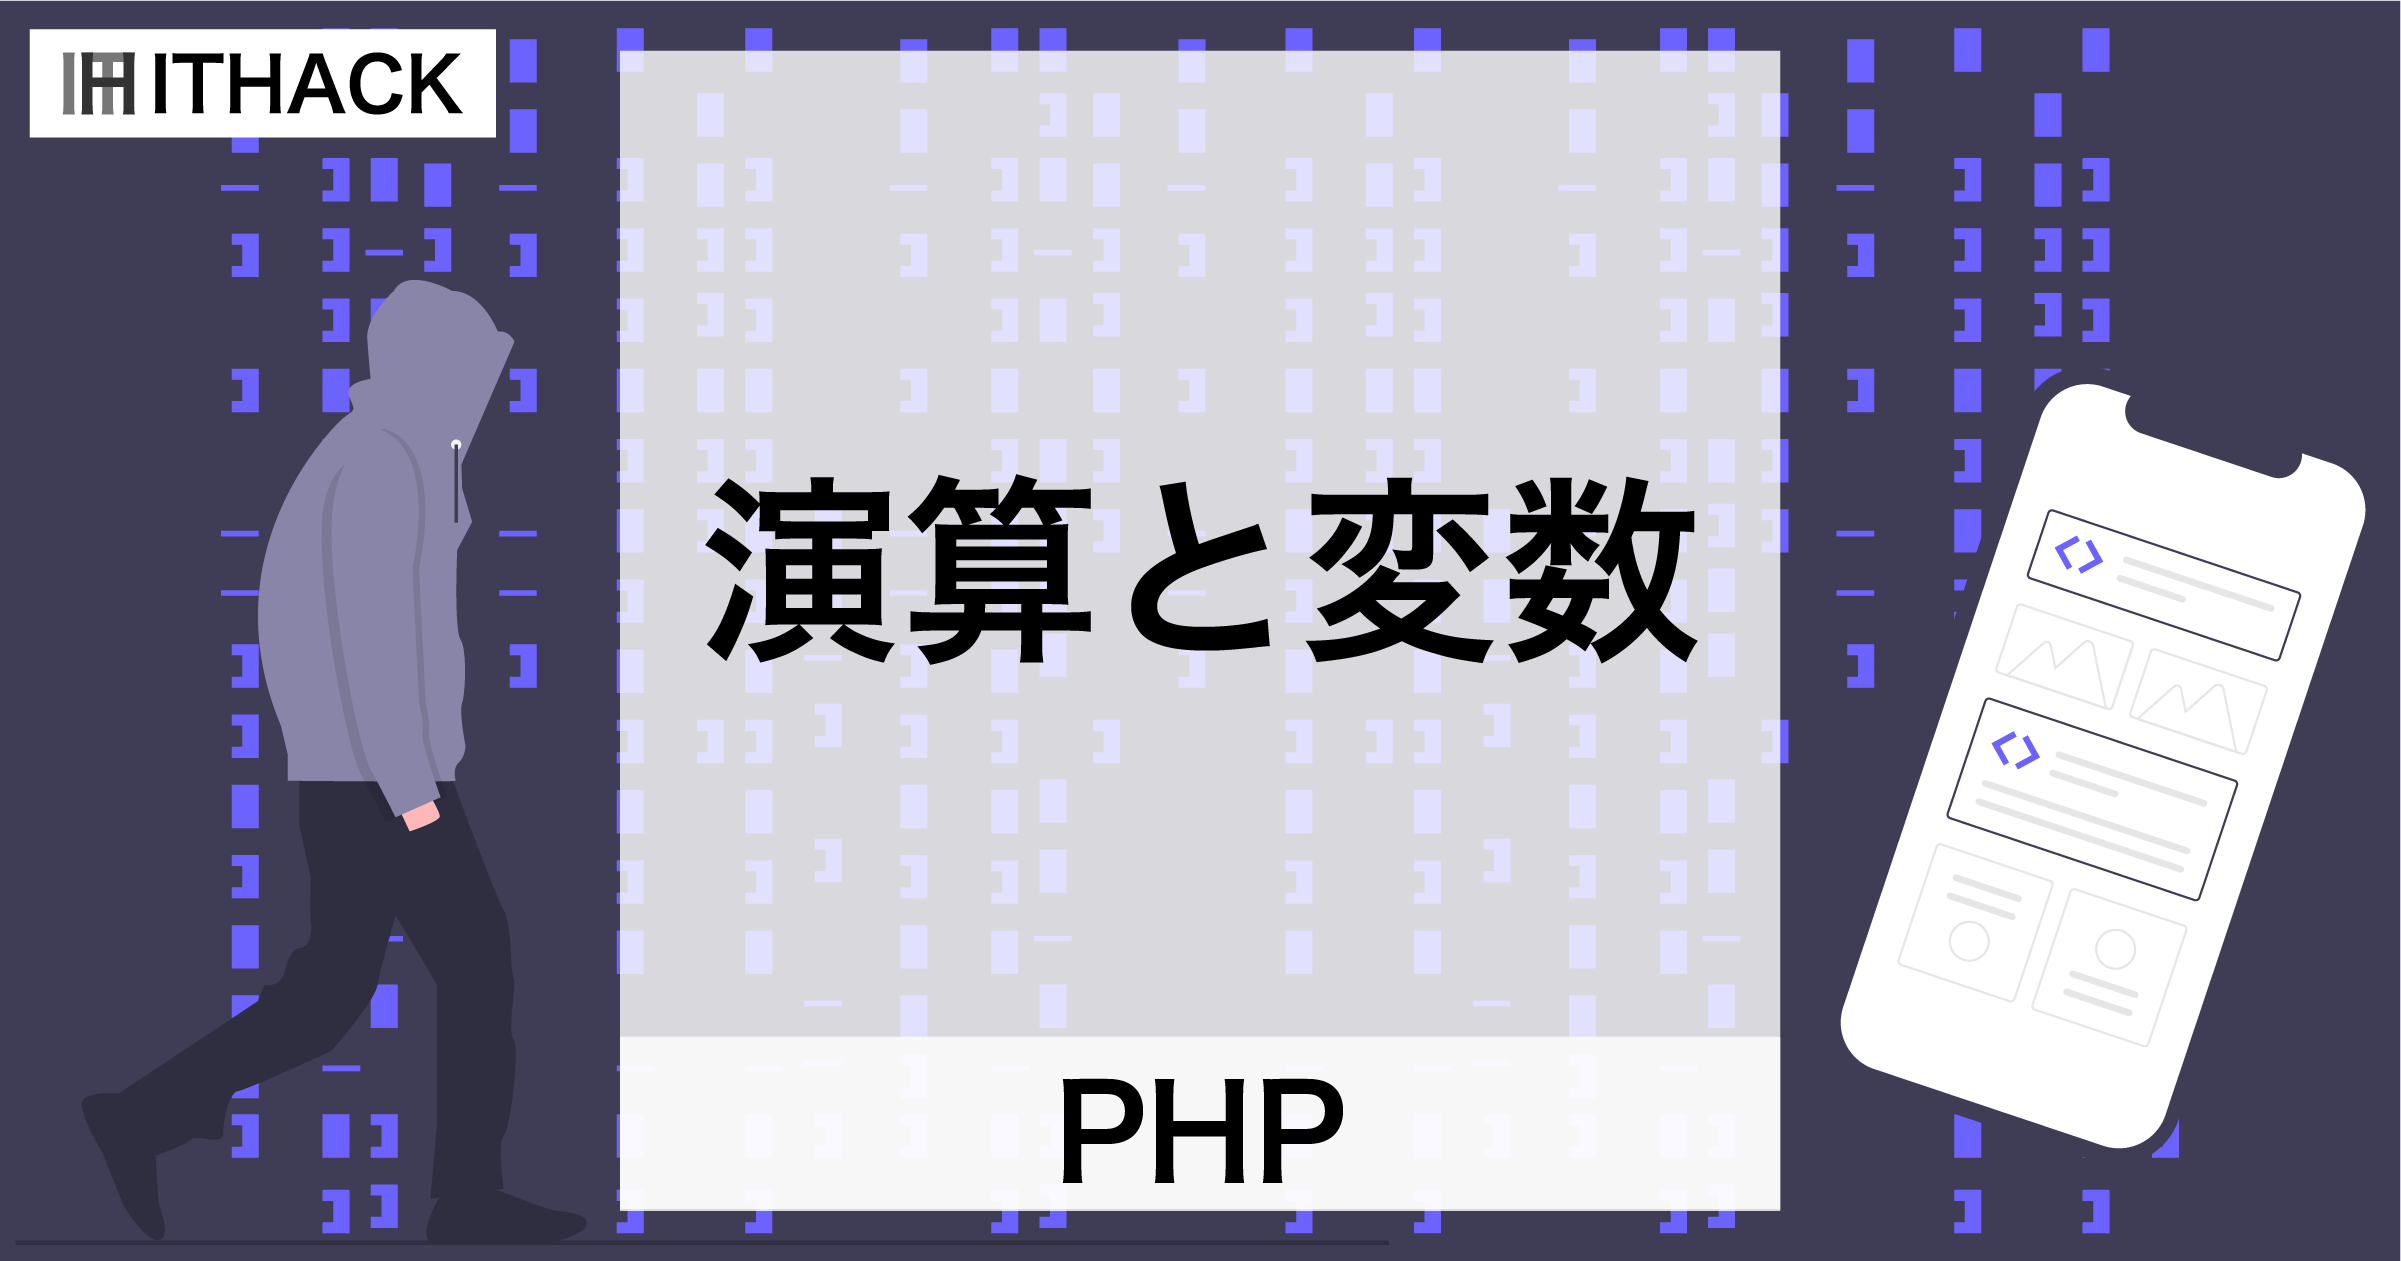 【PHP】演算と変数 - 文字列結合や算術演算で変数を使う